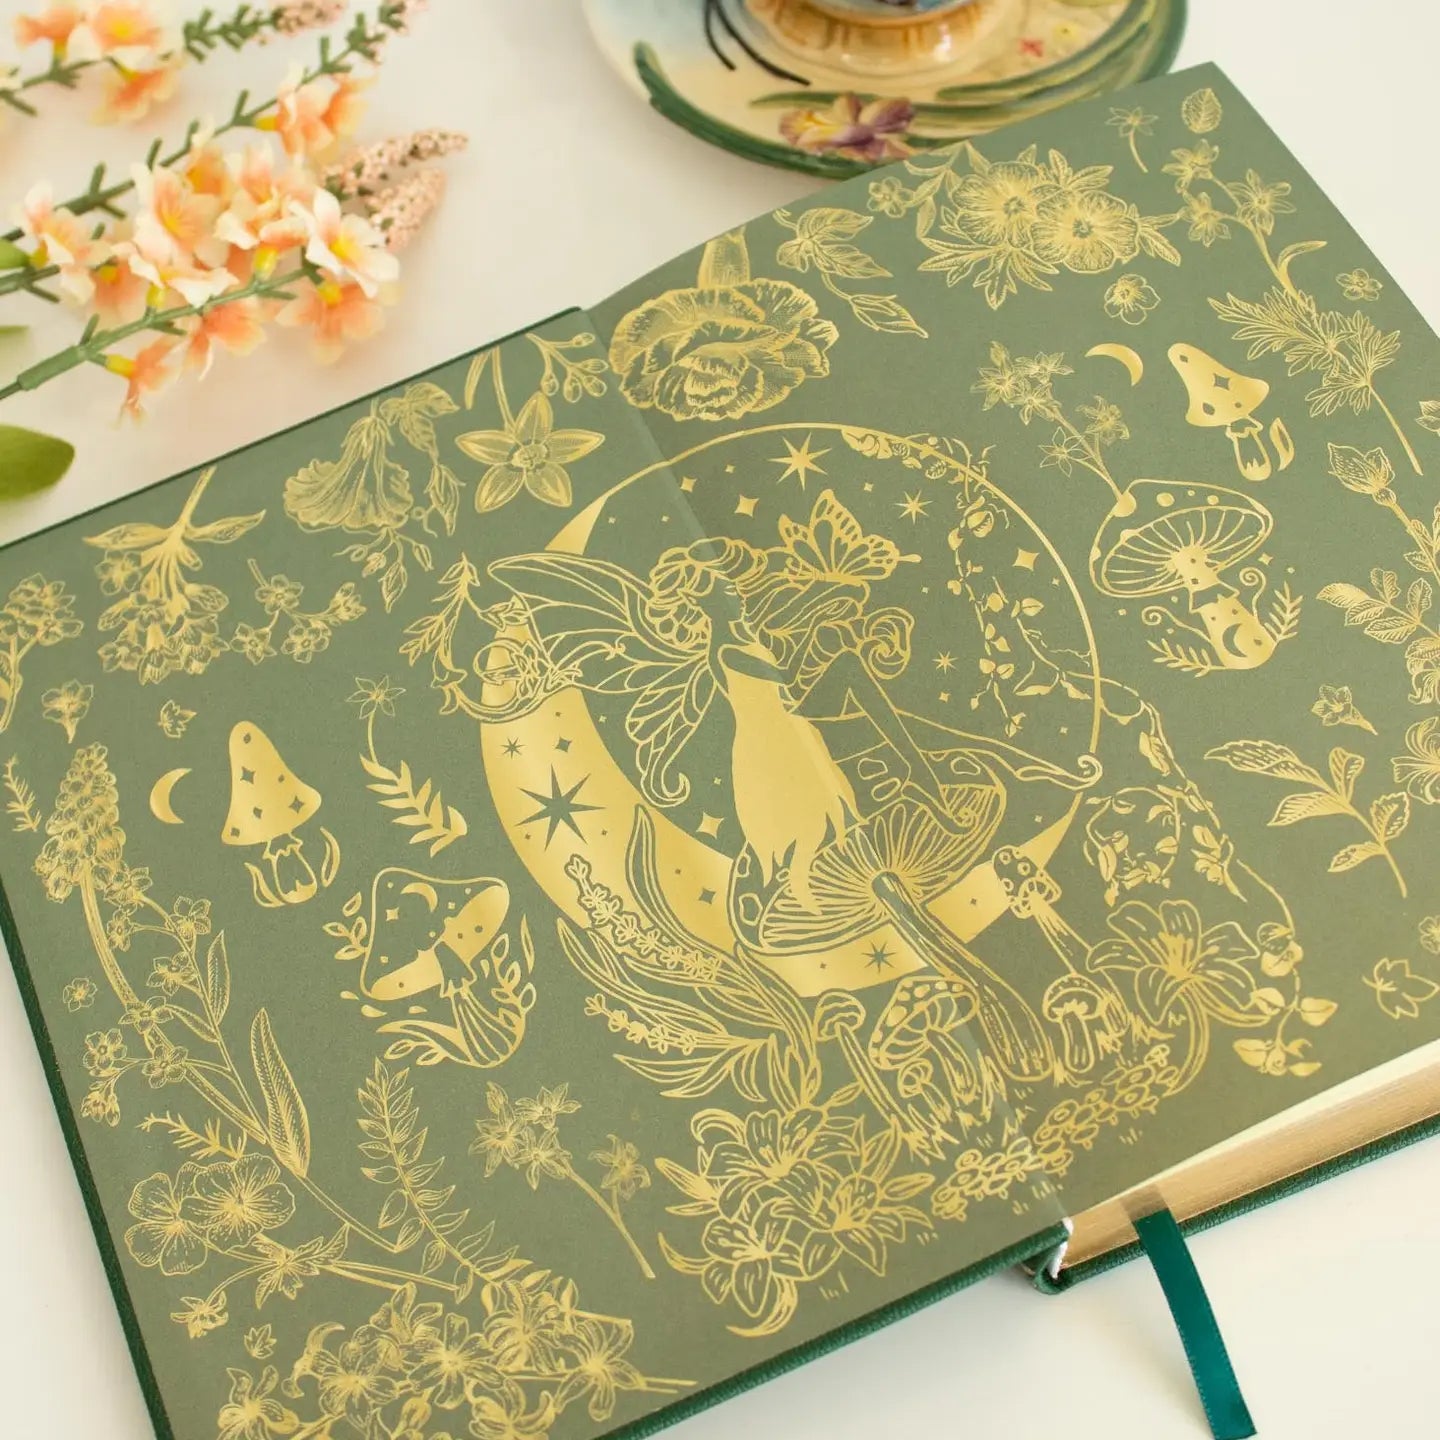 Fairy Garden Journal